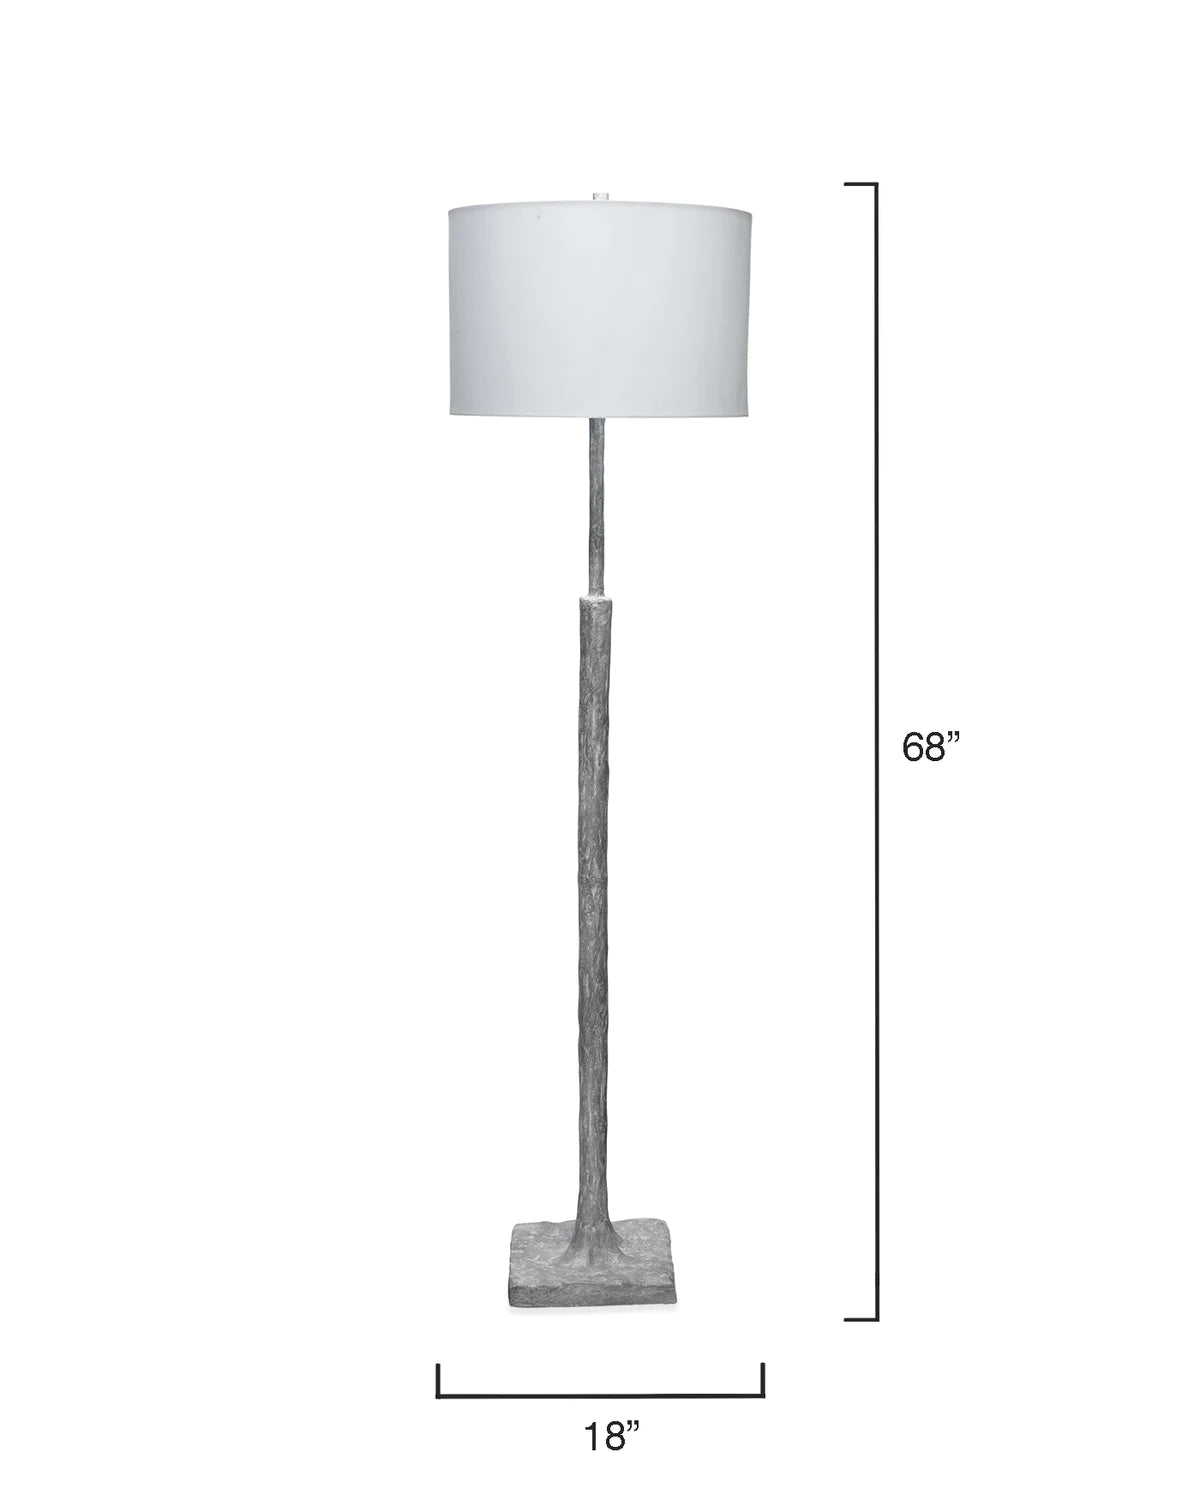 Humble Floor Lamp